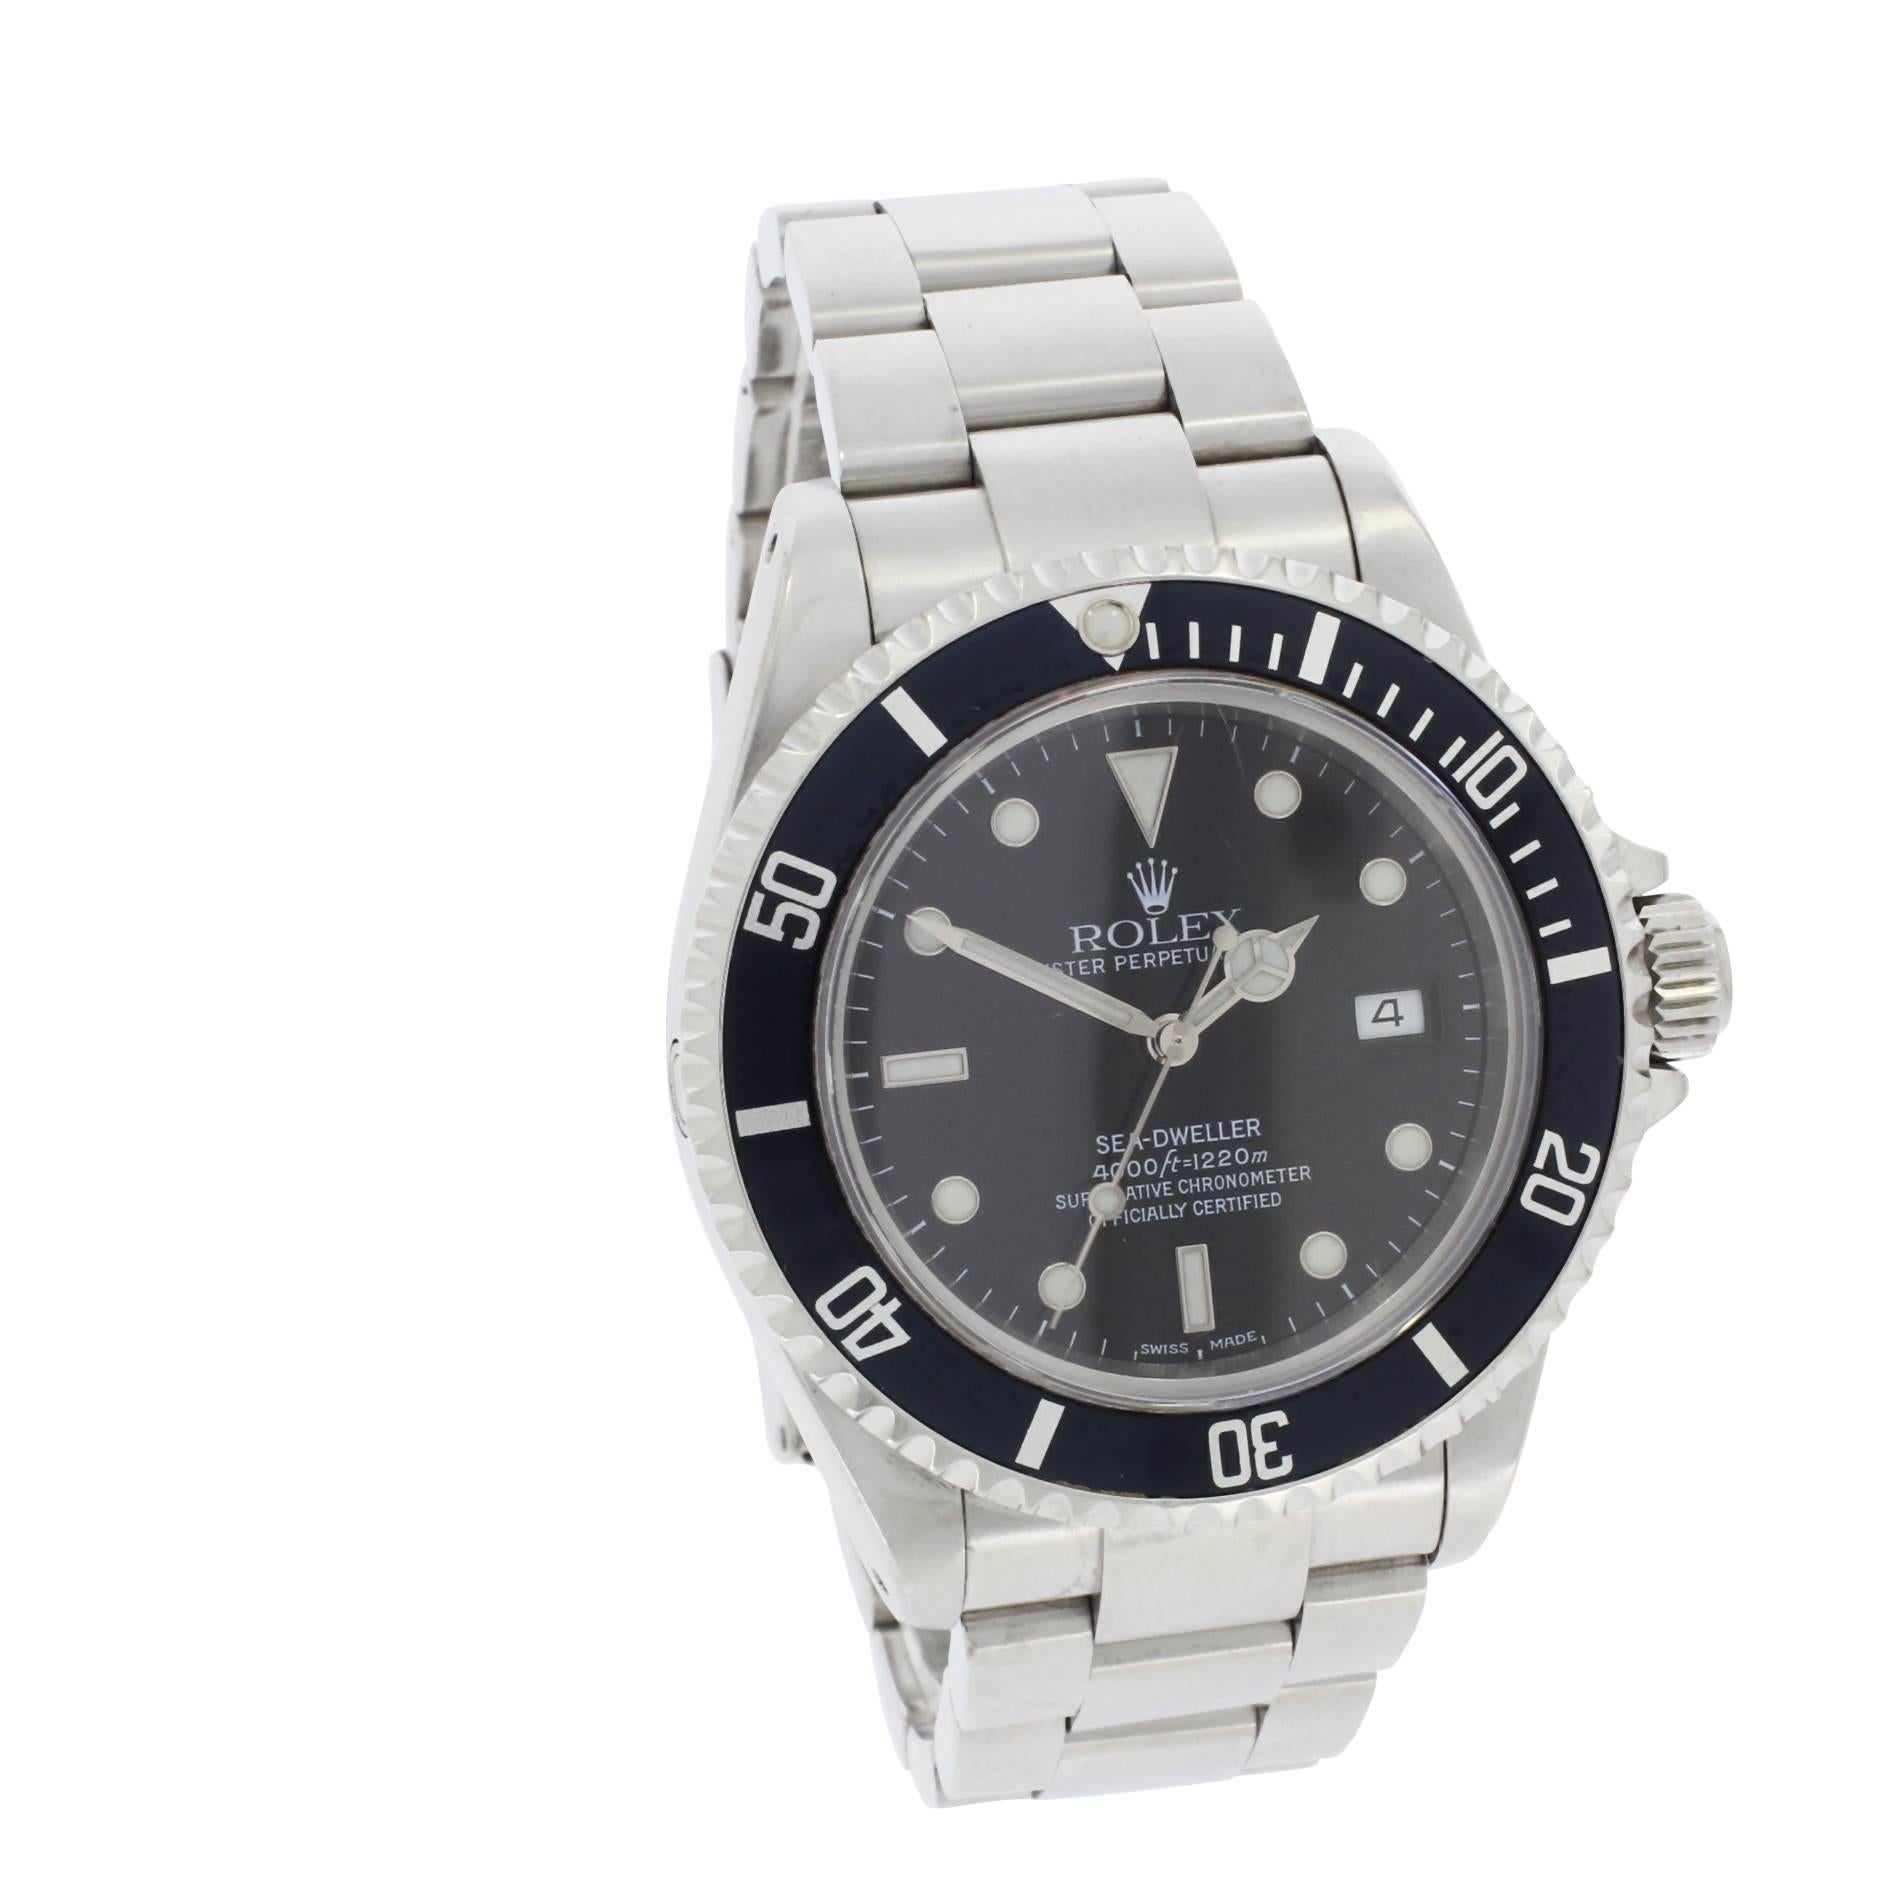 Rolex Stainless Steel Sea-Dweller Wristwatch Ref 16660, 2001 For Sale 4